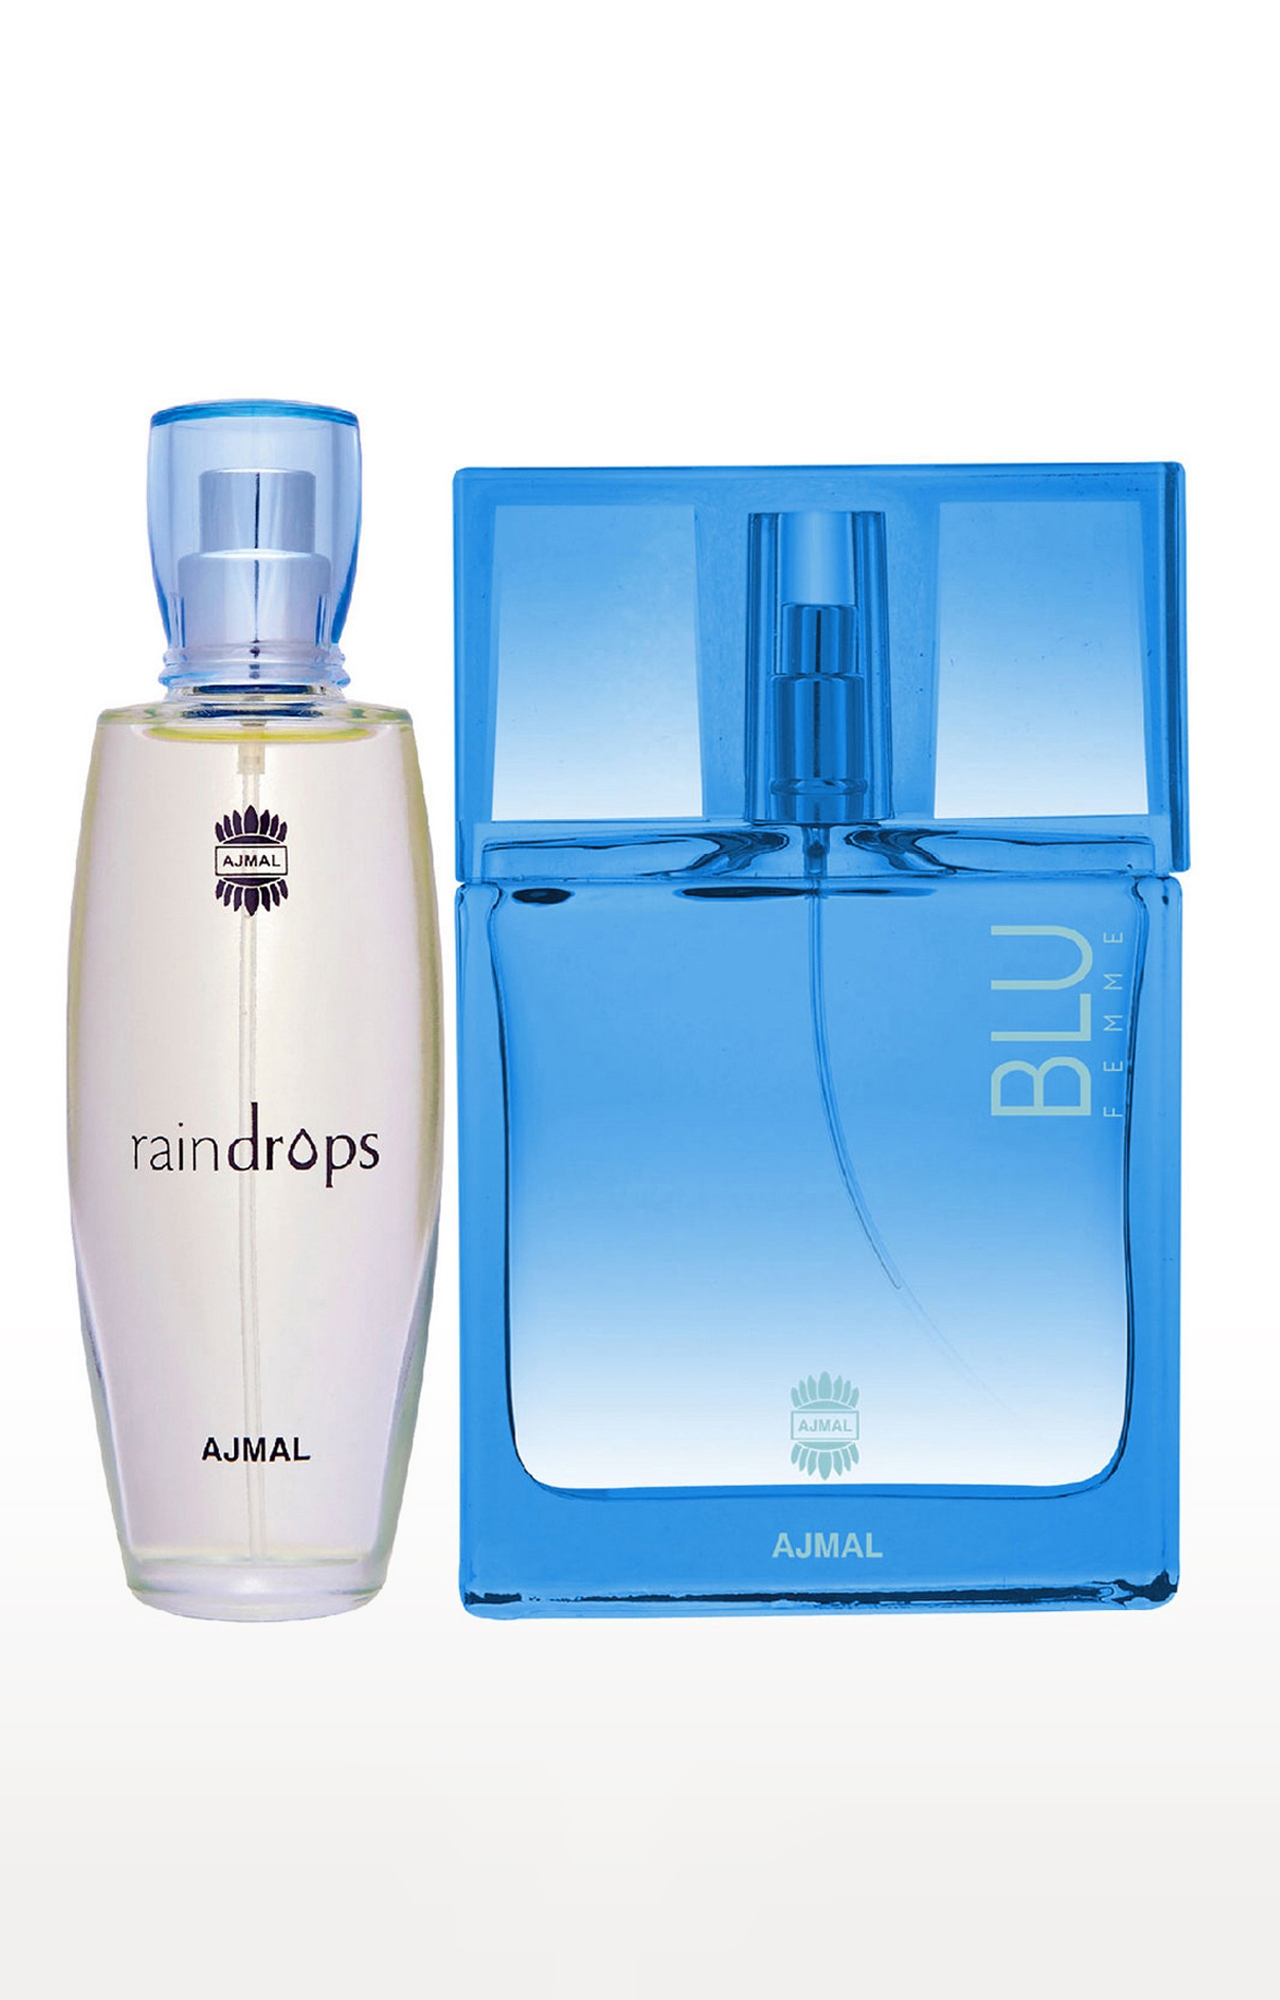 Ajmal Raindrops EDP Perfume 50ml for Women and Blu Femme EDP Perfume 50ml for Women